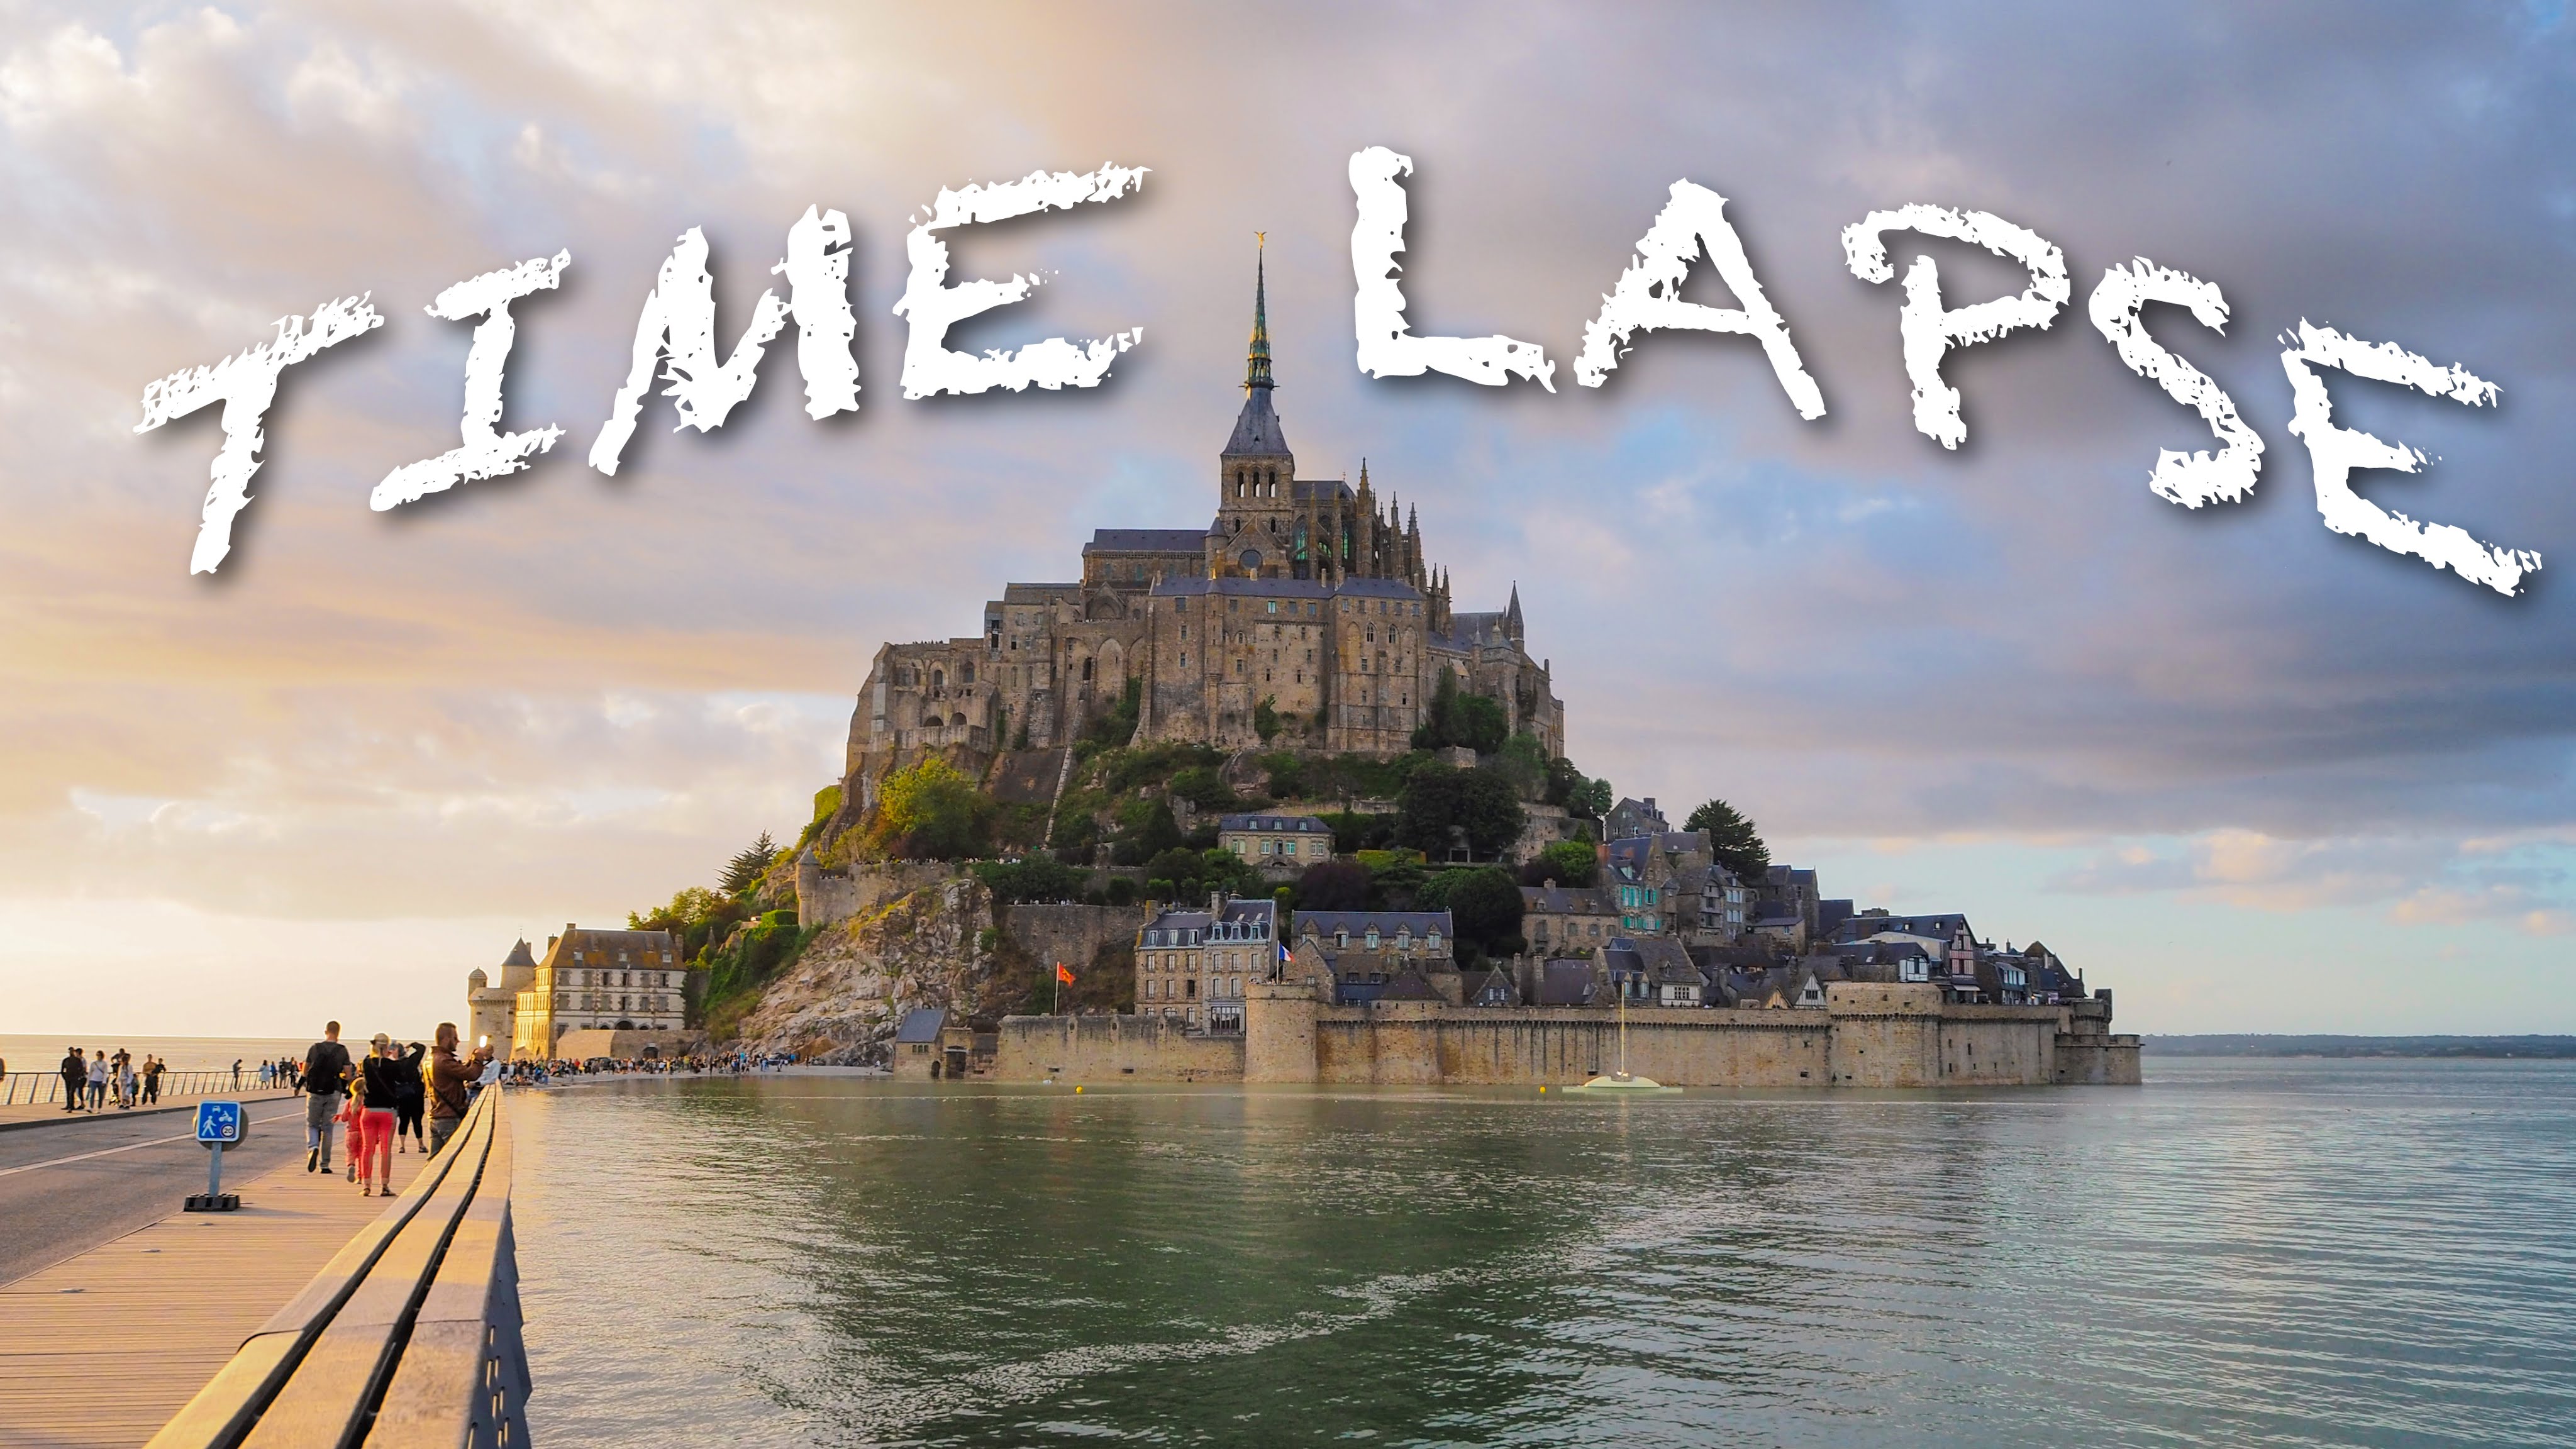 Mont Saint Michel - Tide in Time-Lapse HD - YouTube